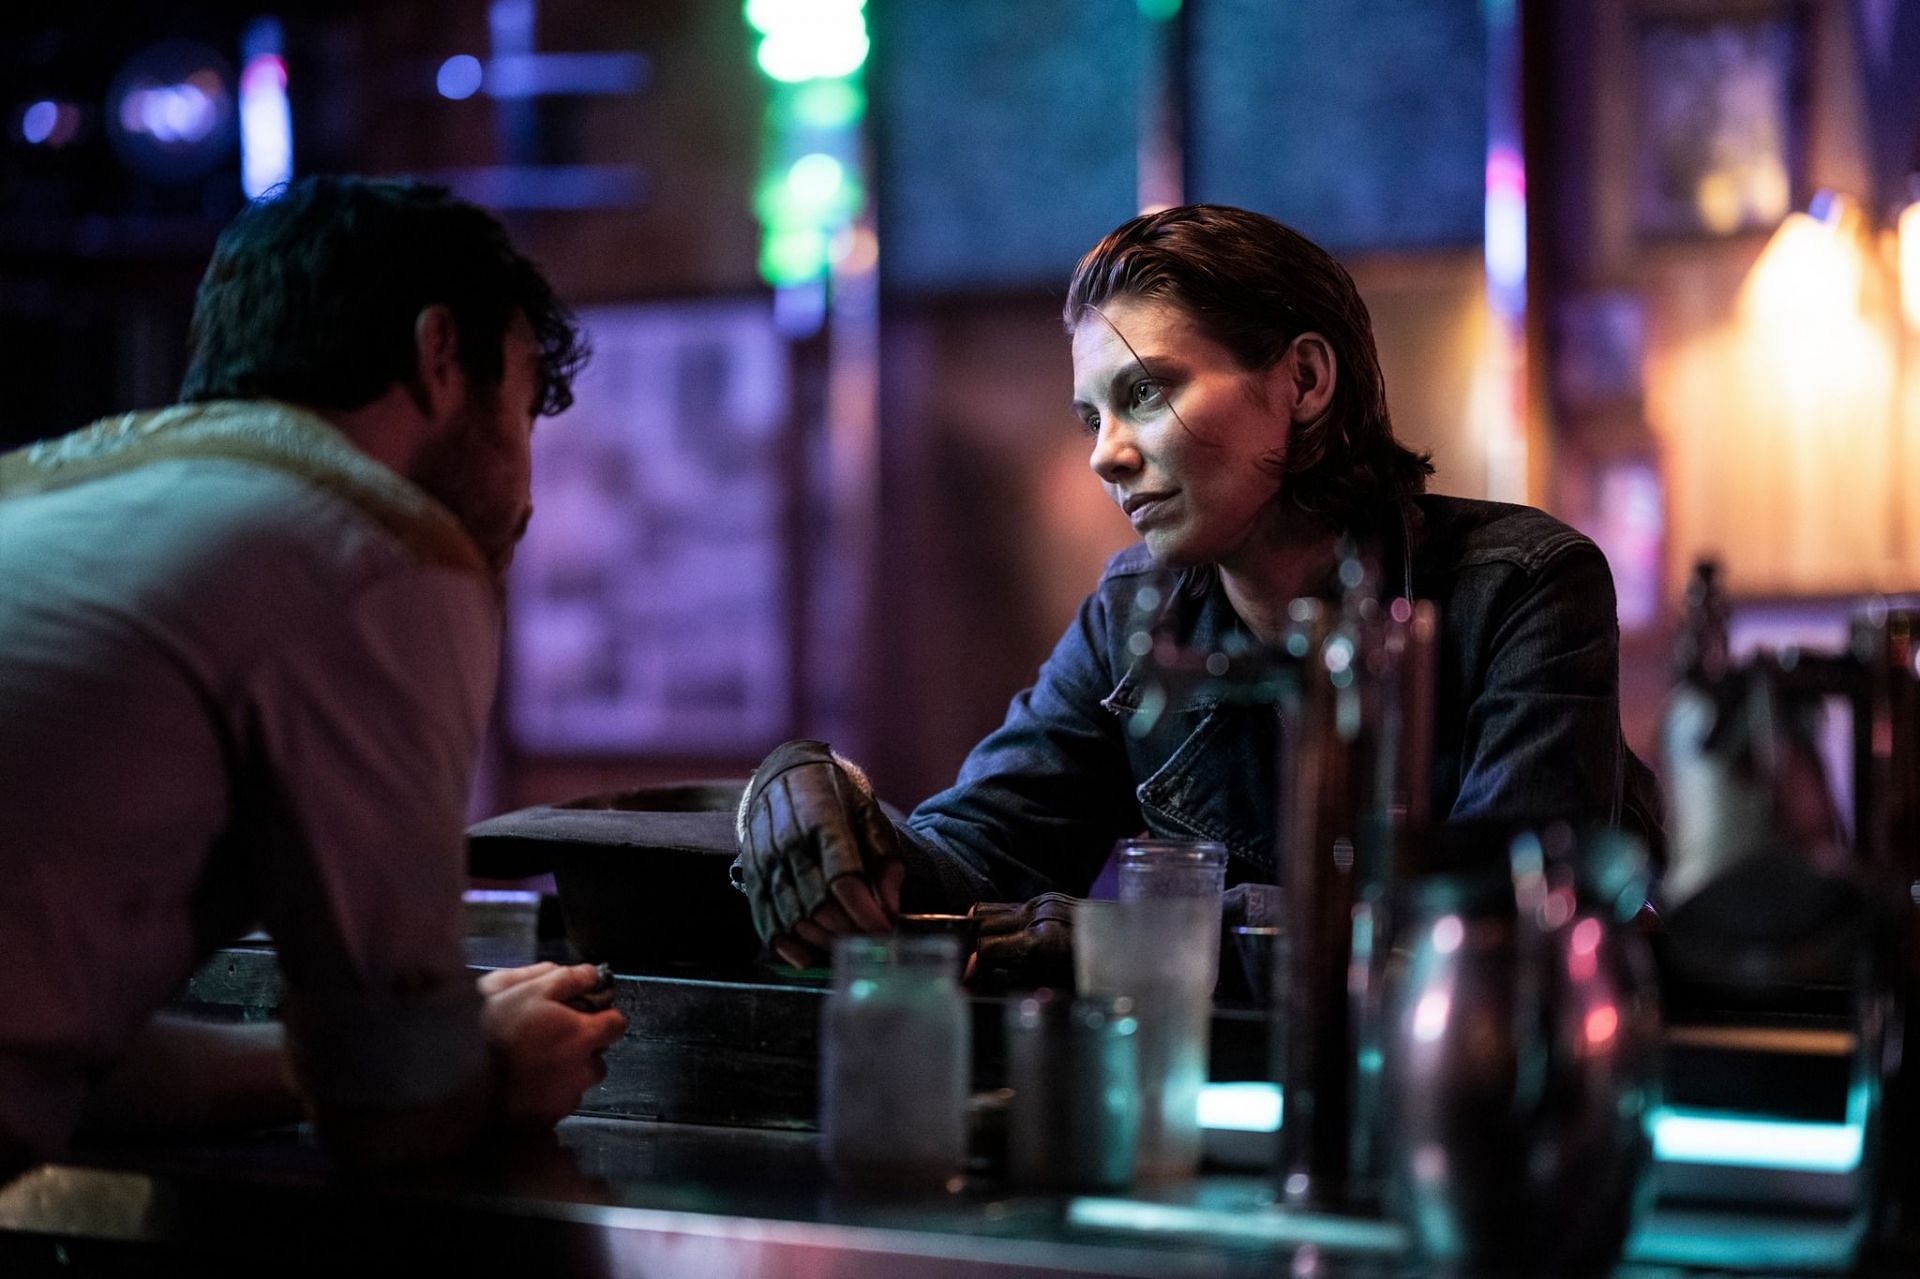 Lauren Cohan as Maggie (From The Walking Dead